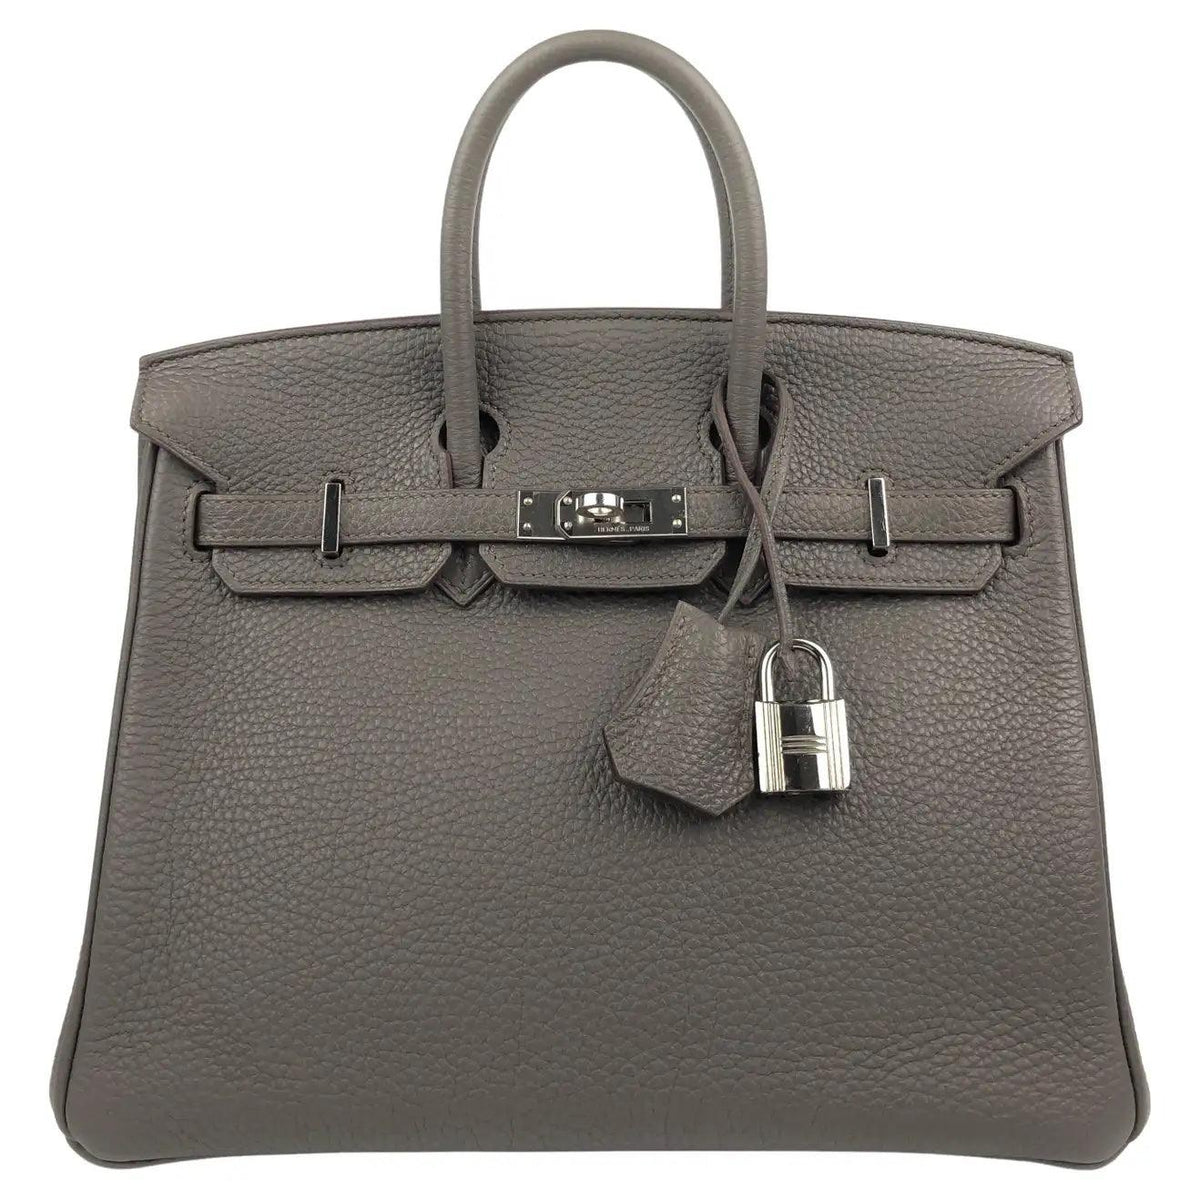 Hermès - Authenticated Birkin 25 Handbag - Leather Brown Plain for Women, Never Worn